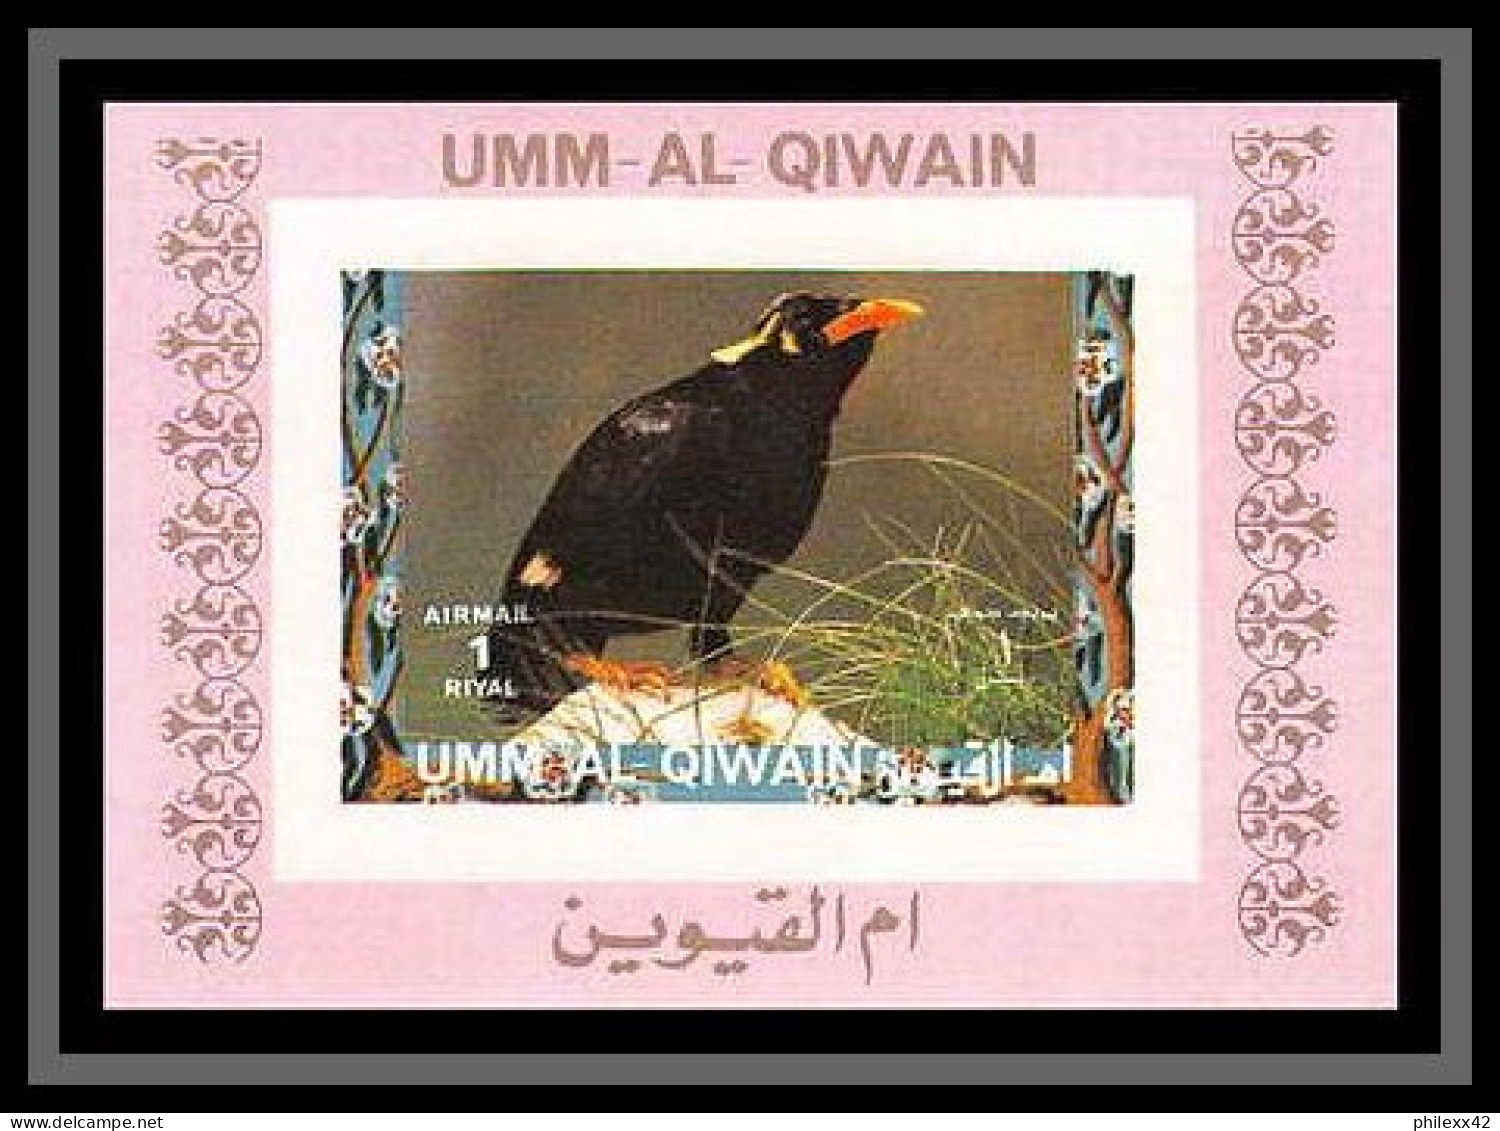 0056/ Umm al Qiwain deluxe blocs ** MNH michel N° 1402 / 1417 Parrots and Finches oiseaux (birds) tirage rose imperf